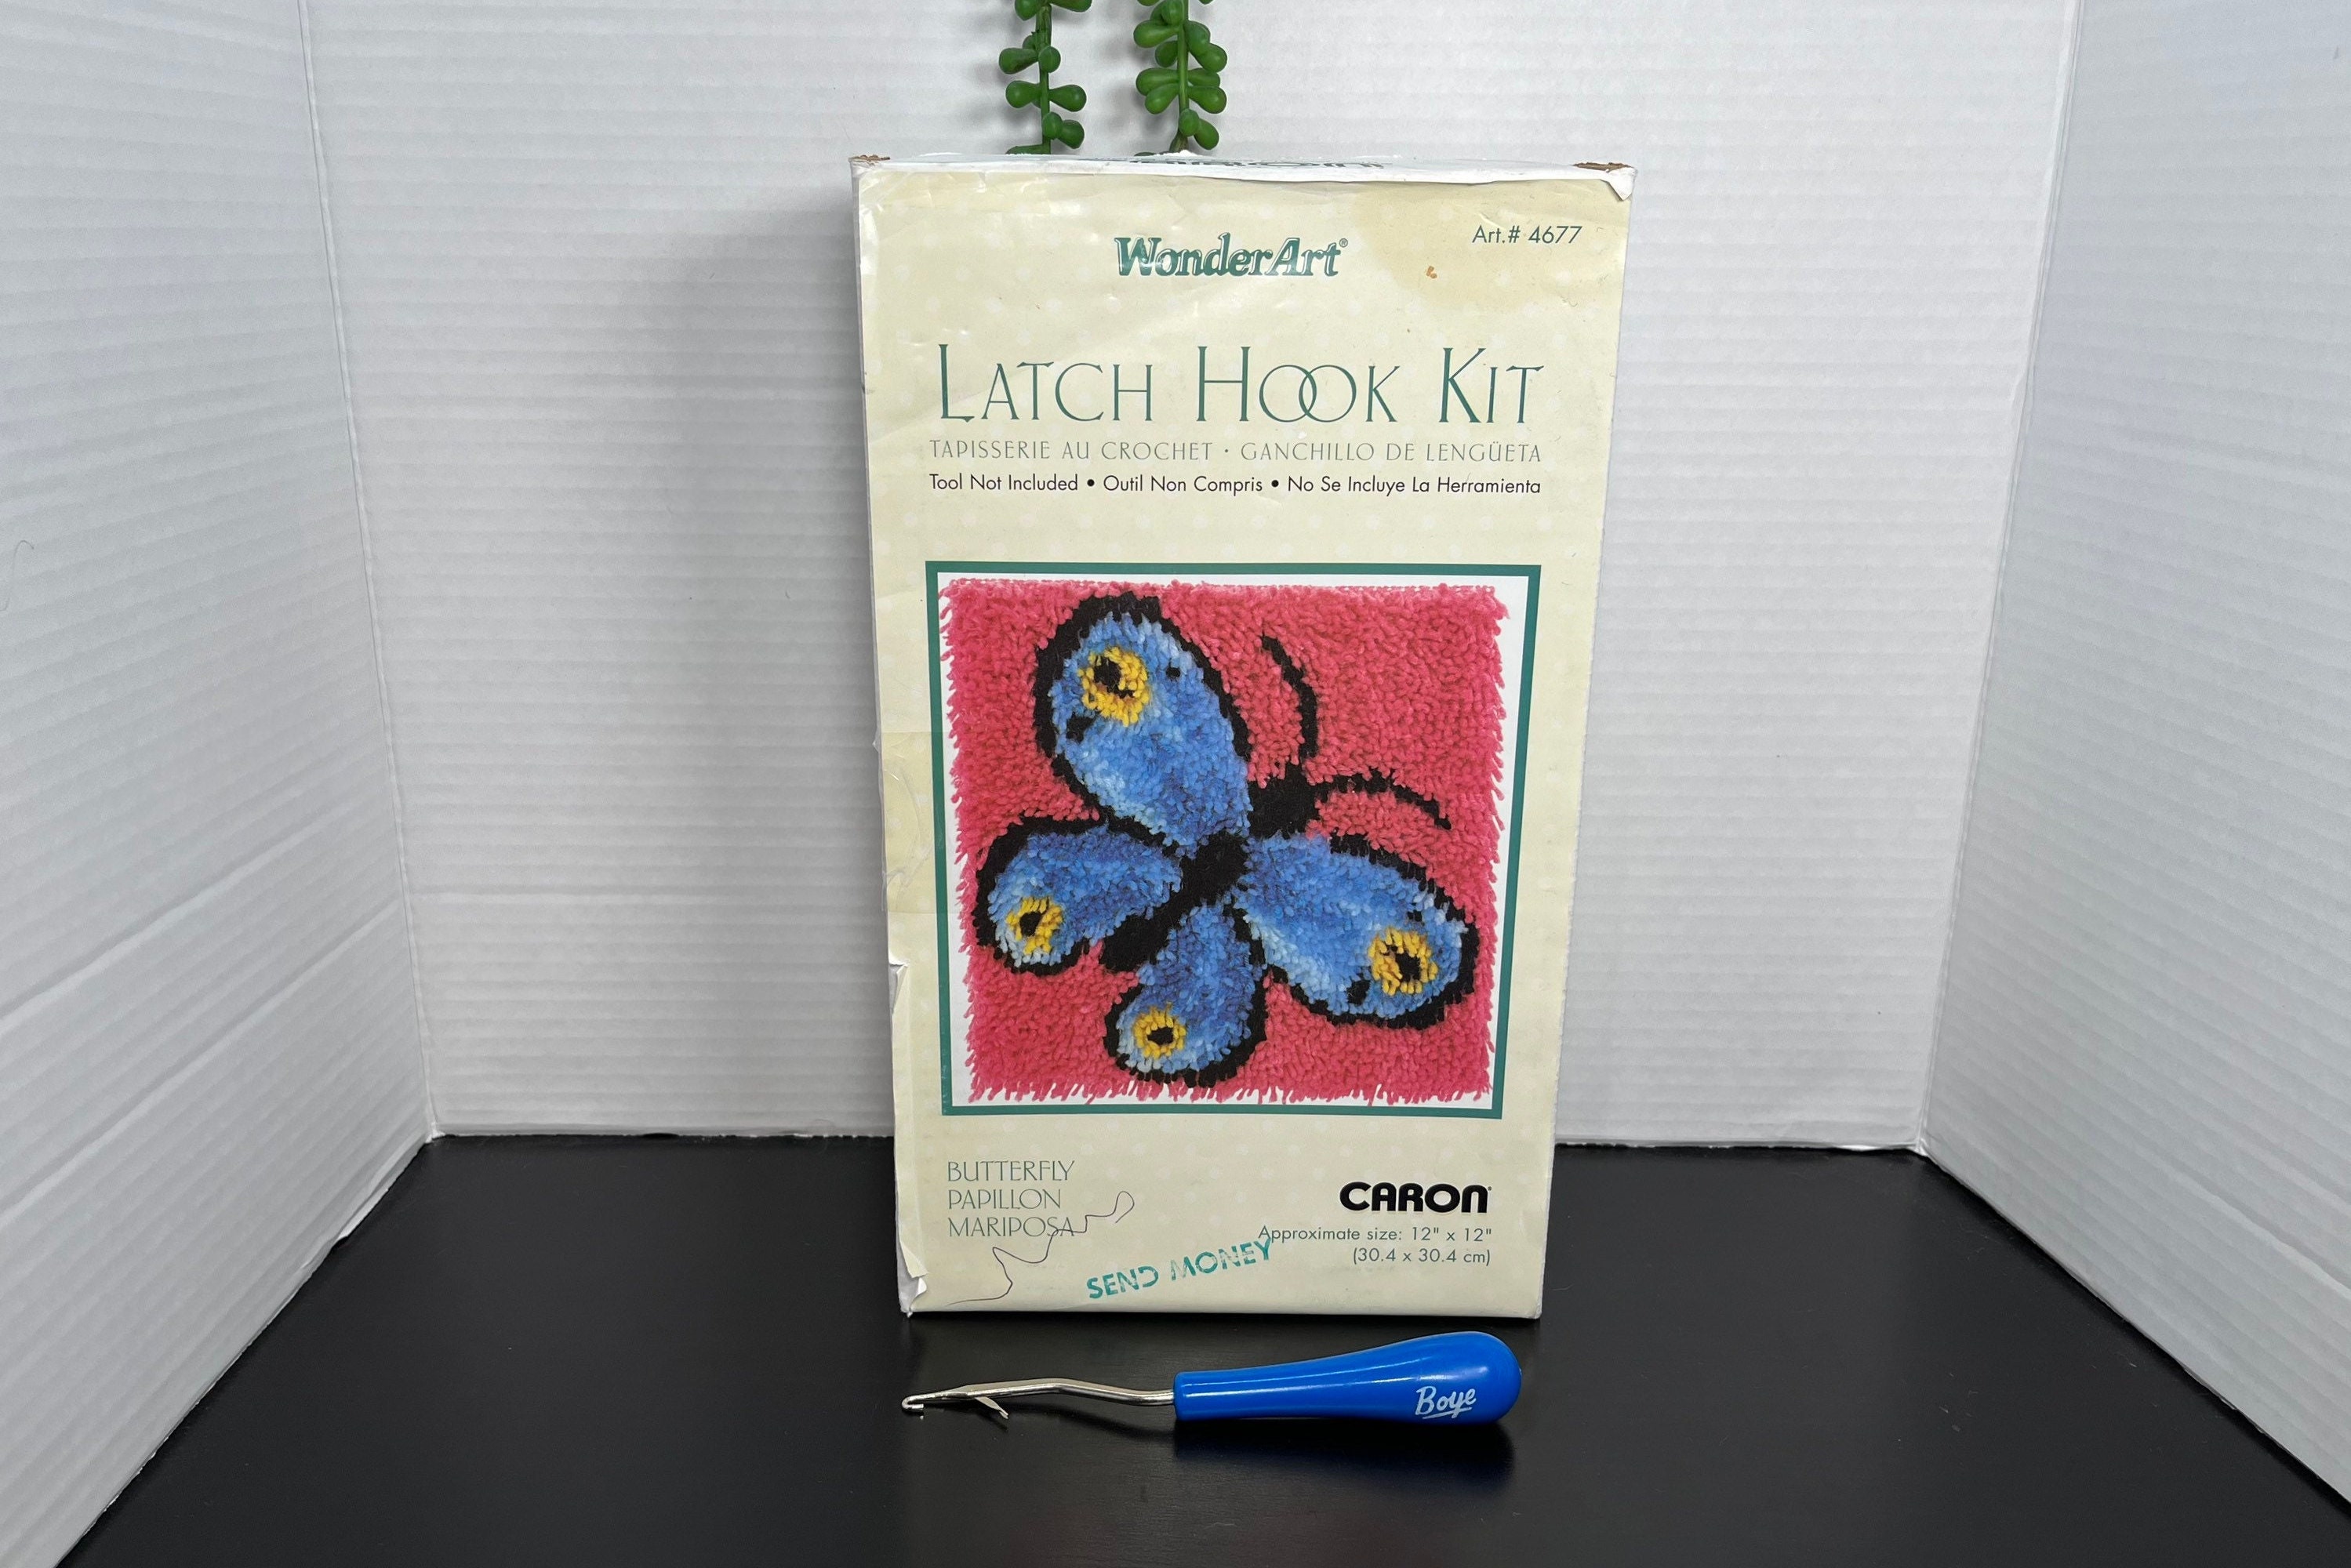 Leisure Arts Latch Hook Kit Butterfly, 14, Latch Hook Kit, Latch